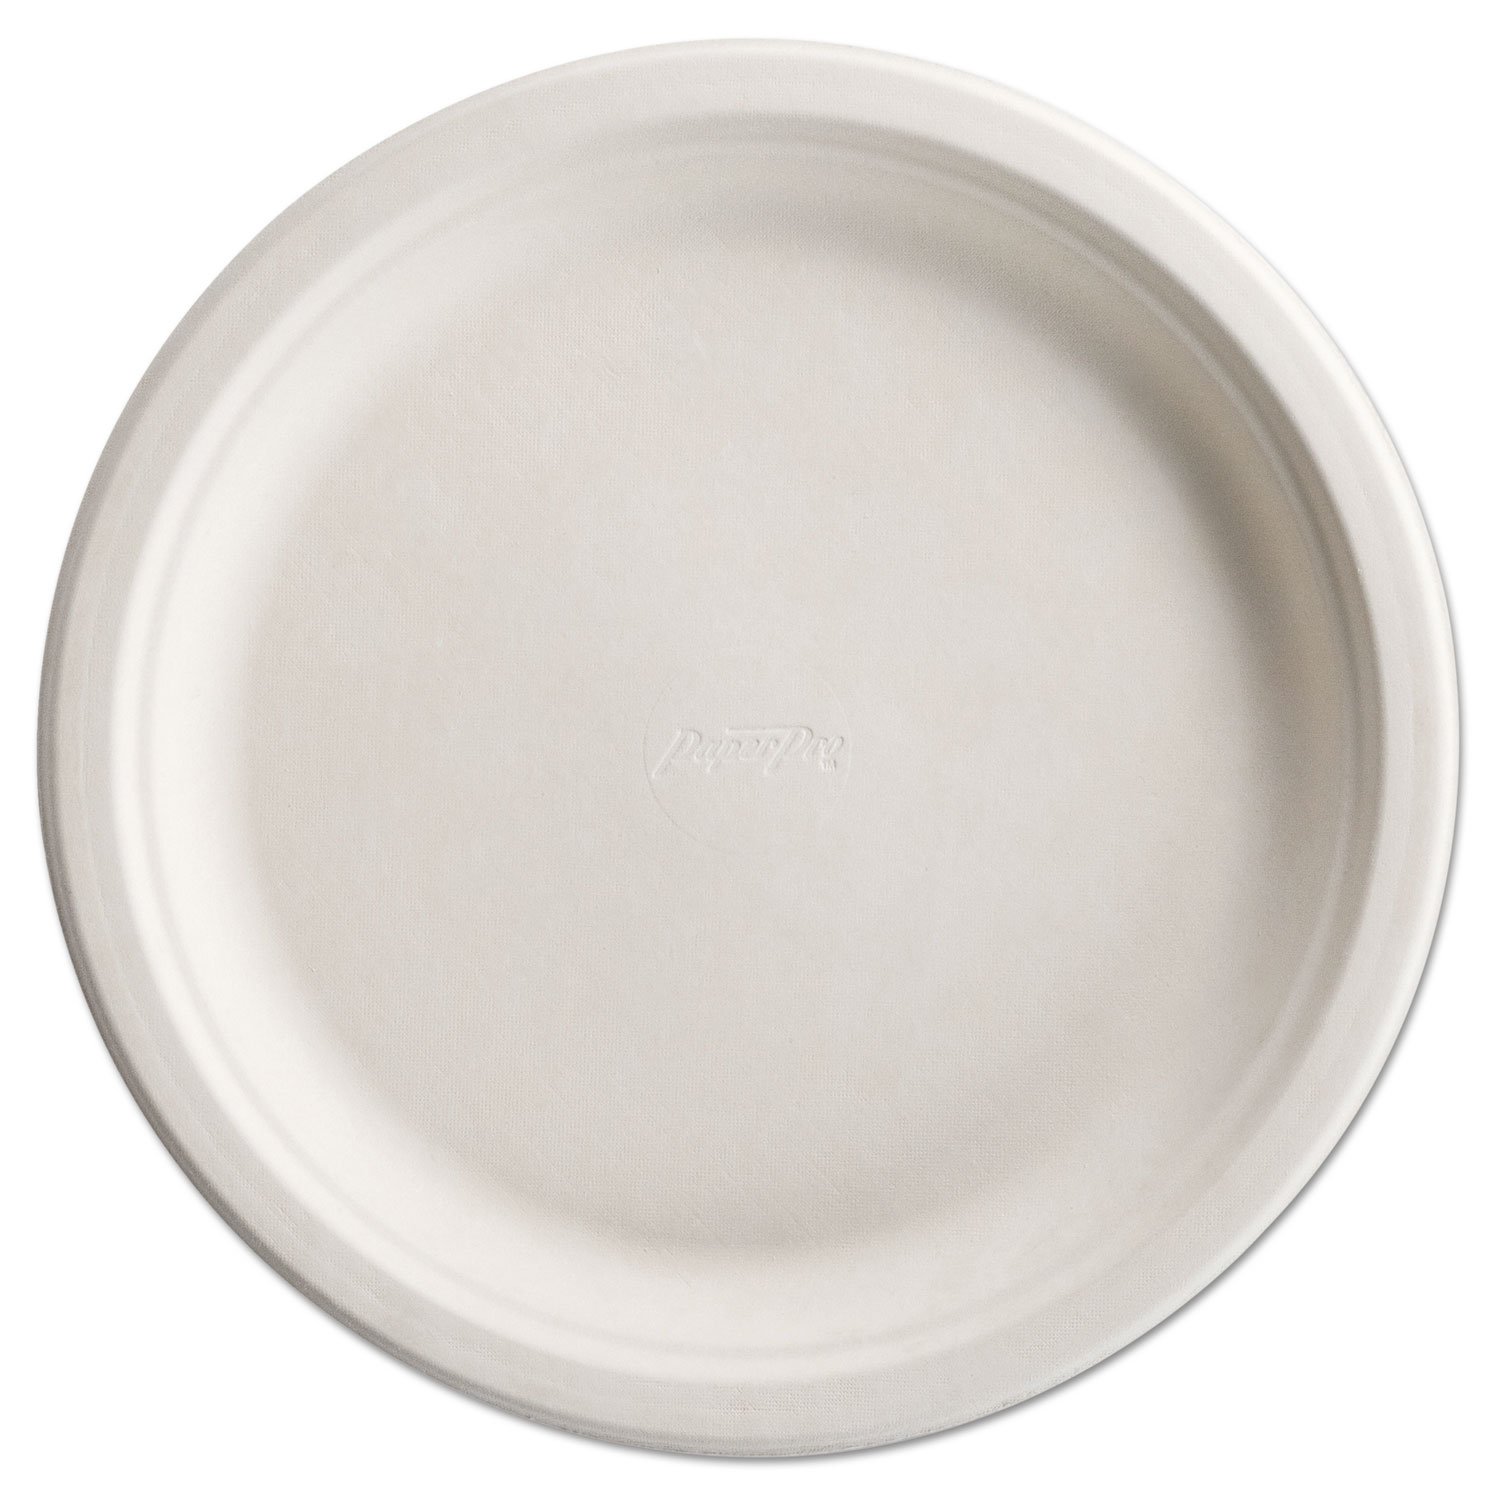  Chinet 25776 PaperPro Naturals Fiber Dinnerware, Plate, 10 1/2 Round Natural 125/PK 4 PK/CT (HUH25776) 